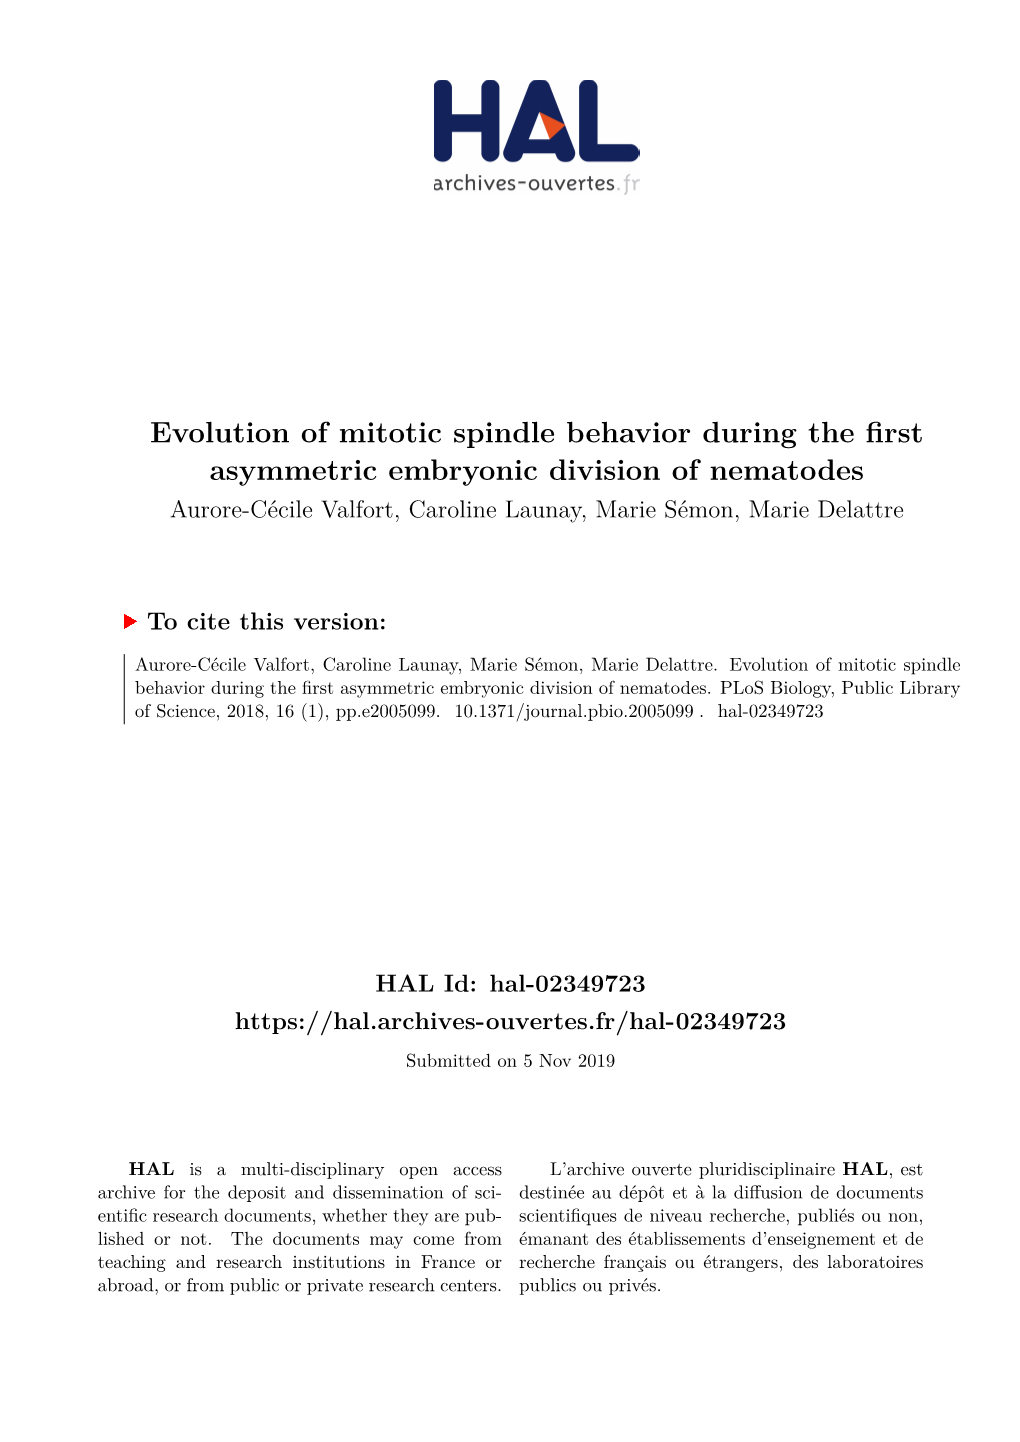 Evolution of Mitotic Spindle Behavior During the First Asymmetric Embryonic Division of Nematodes Aurore-Cécile Valfort, Caroline Launay, Marie Sémon, Marie Delattre